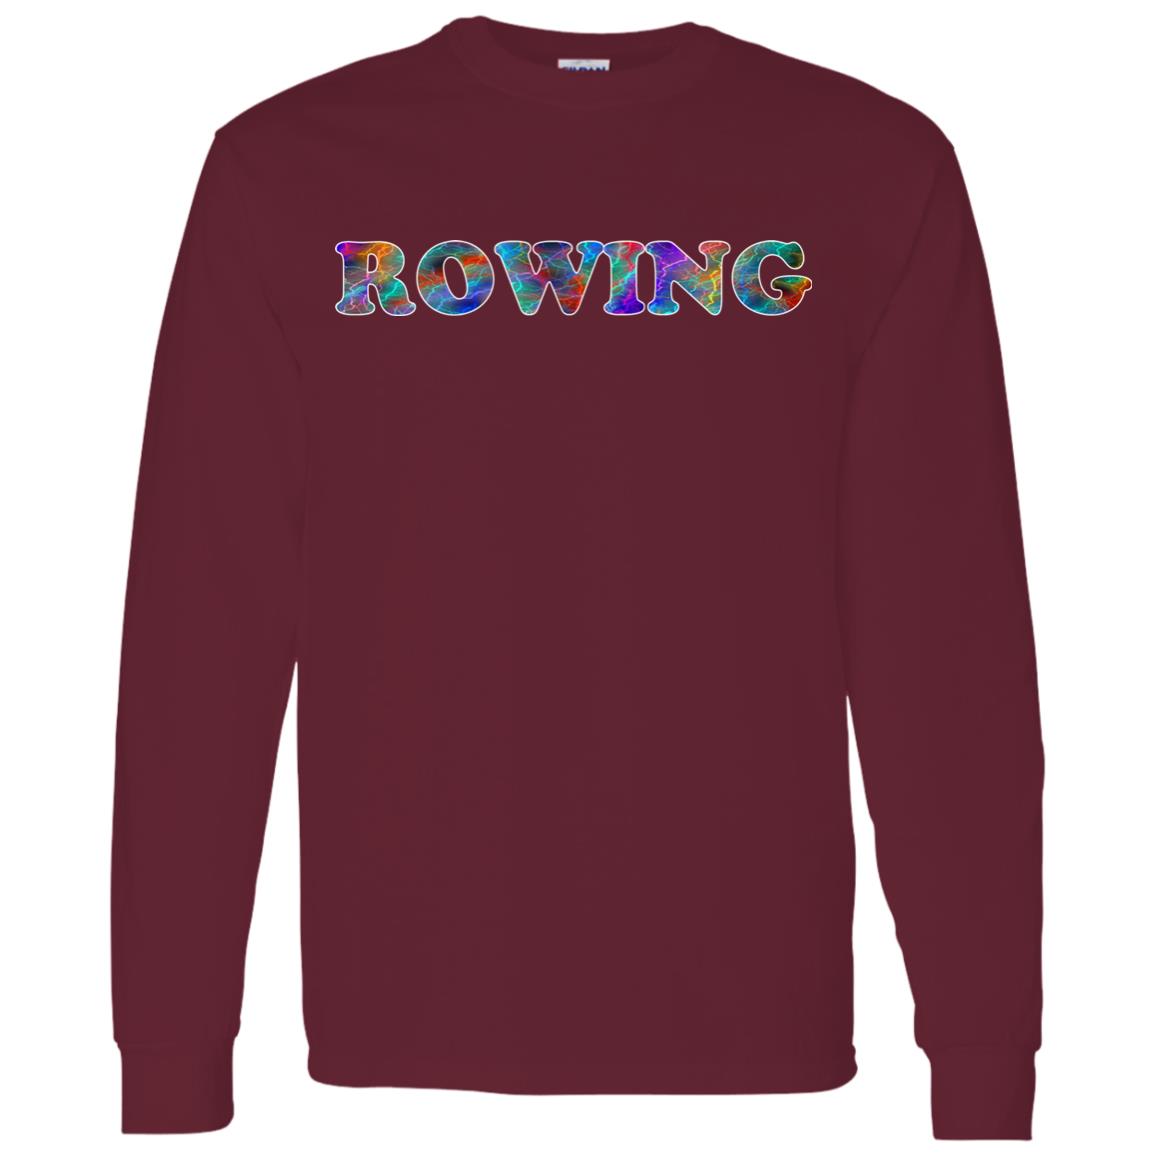 Rowing Long Sleeve Sport T-Shirt